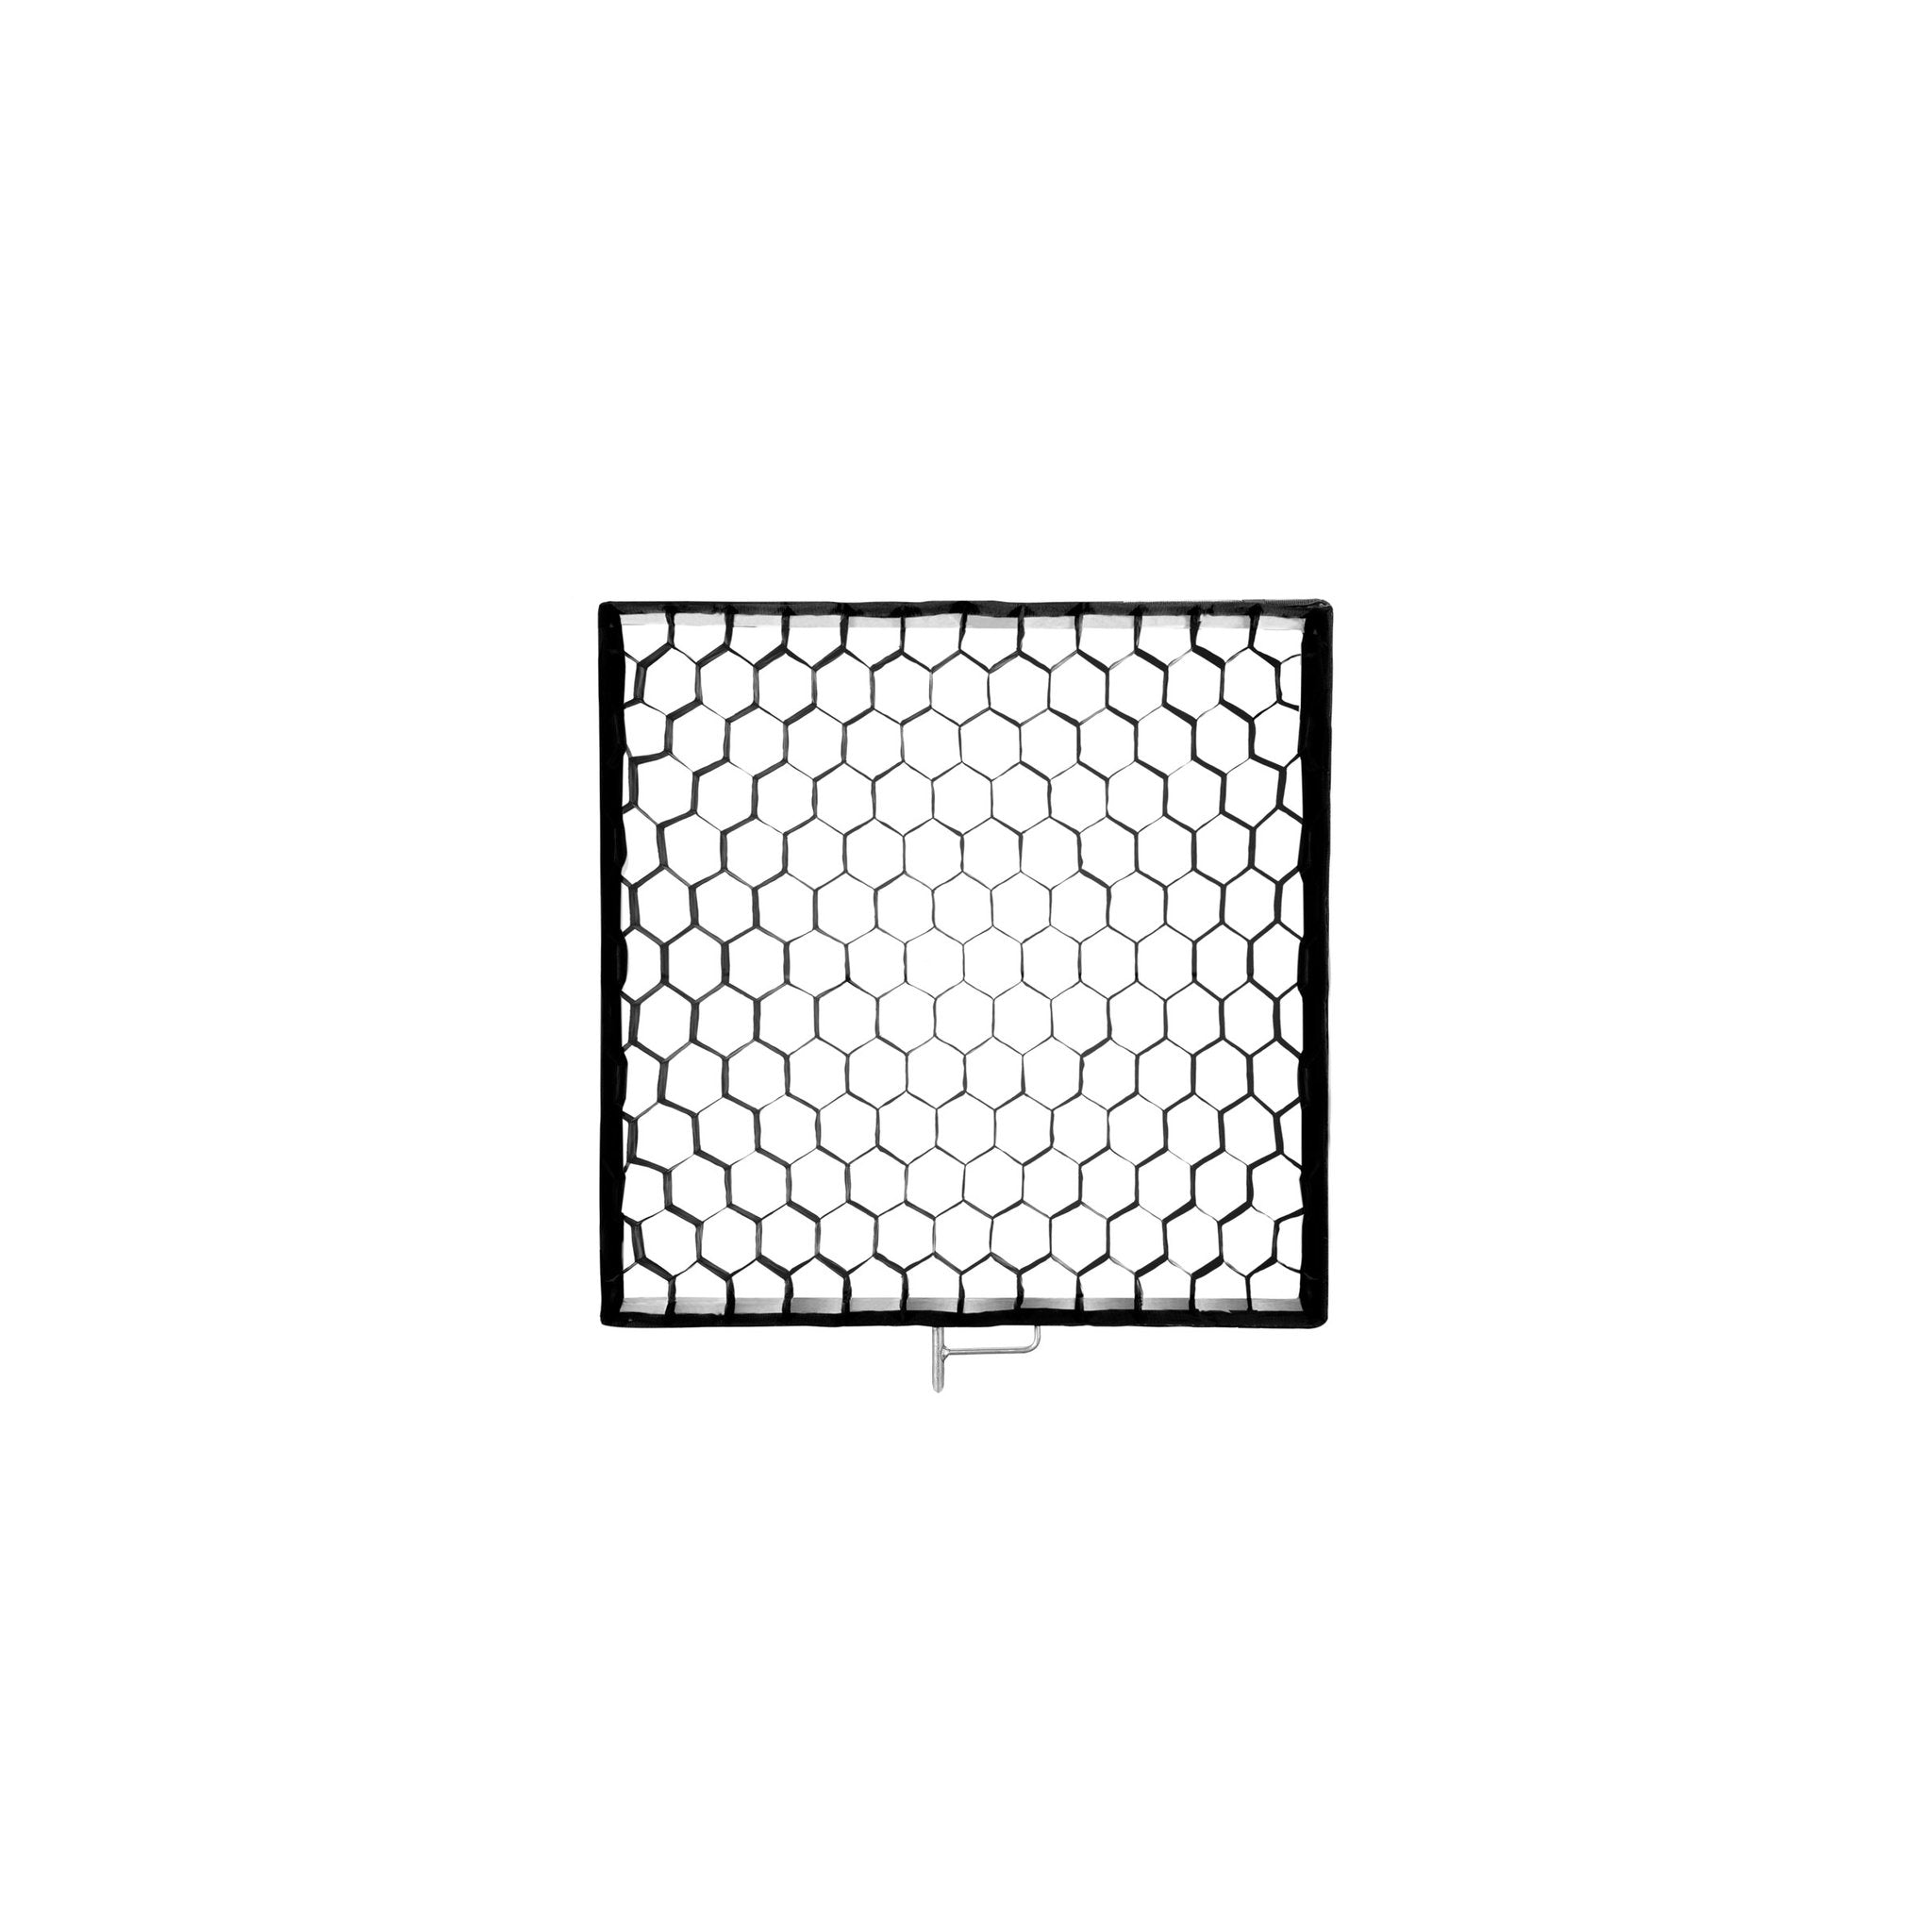 3x3' Honeycrate 50° (0,9x0,9m)